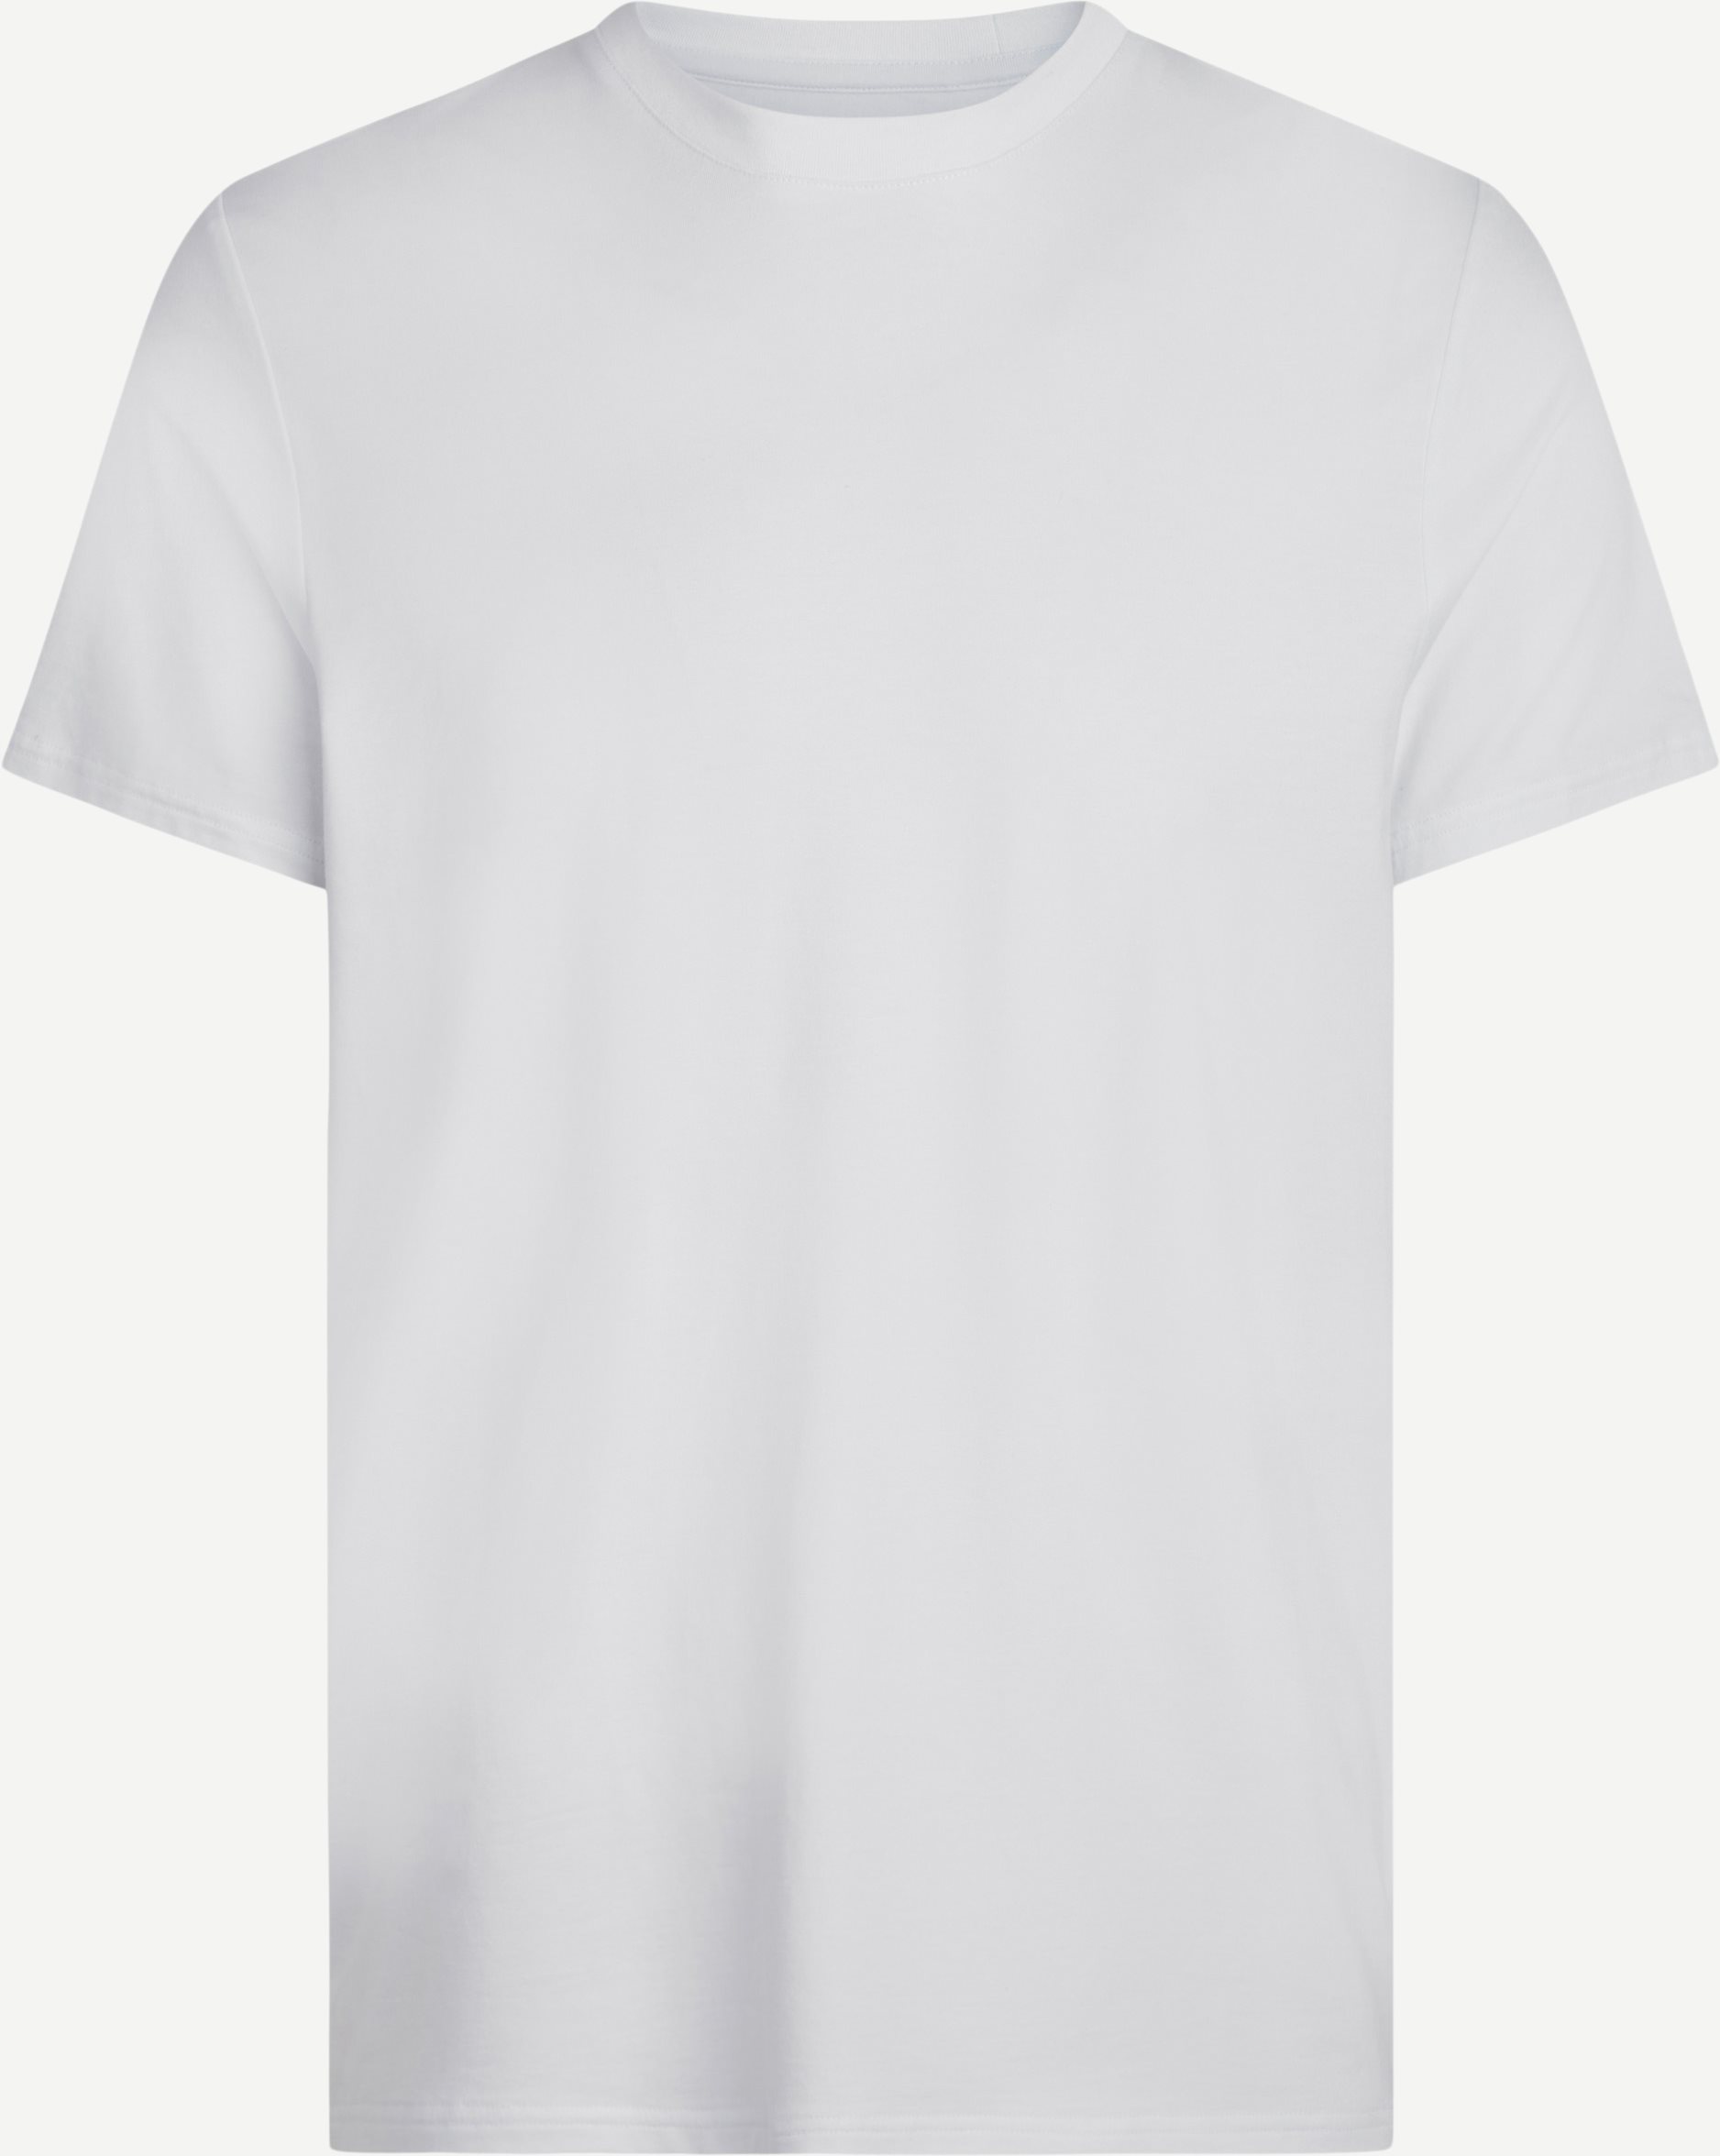 URBAN QUEST T-shirts 1330 BAMBOO TEE White